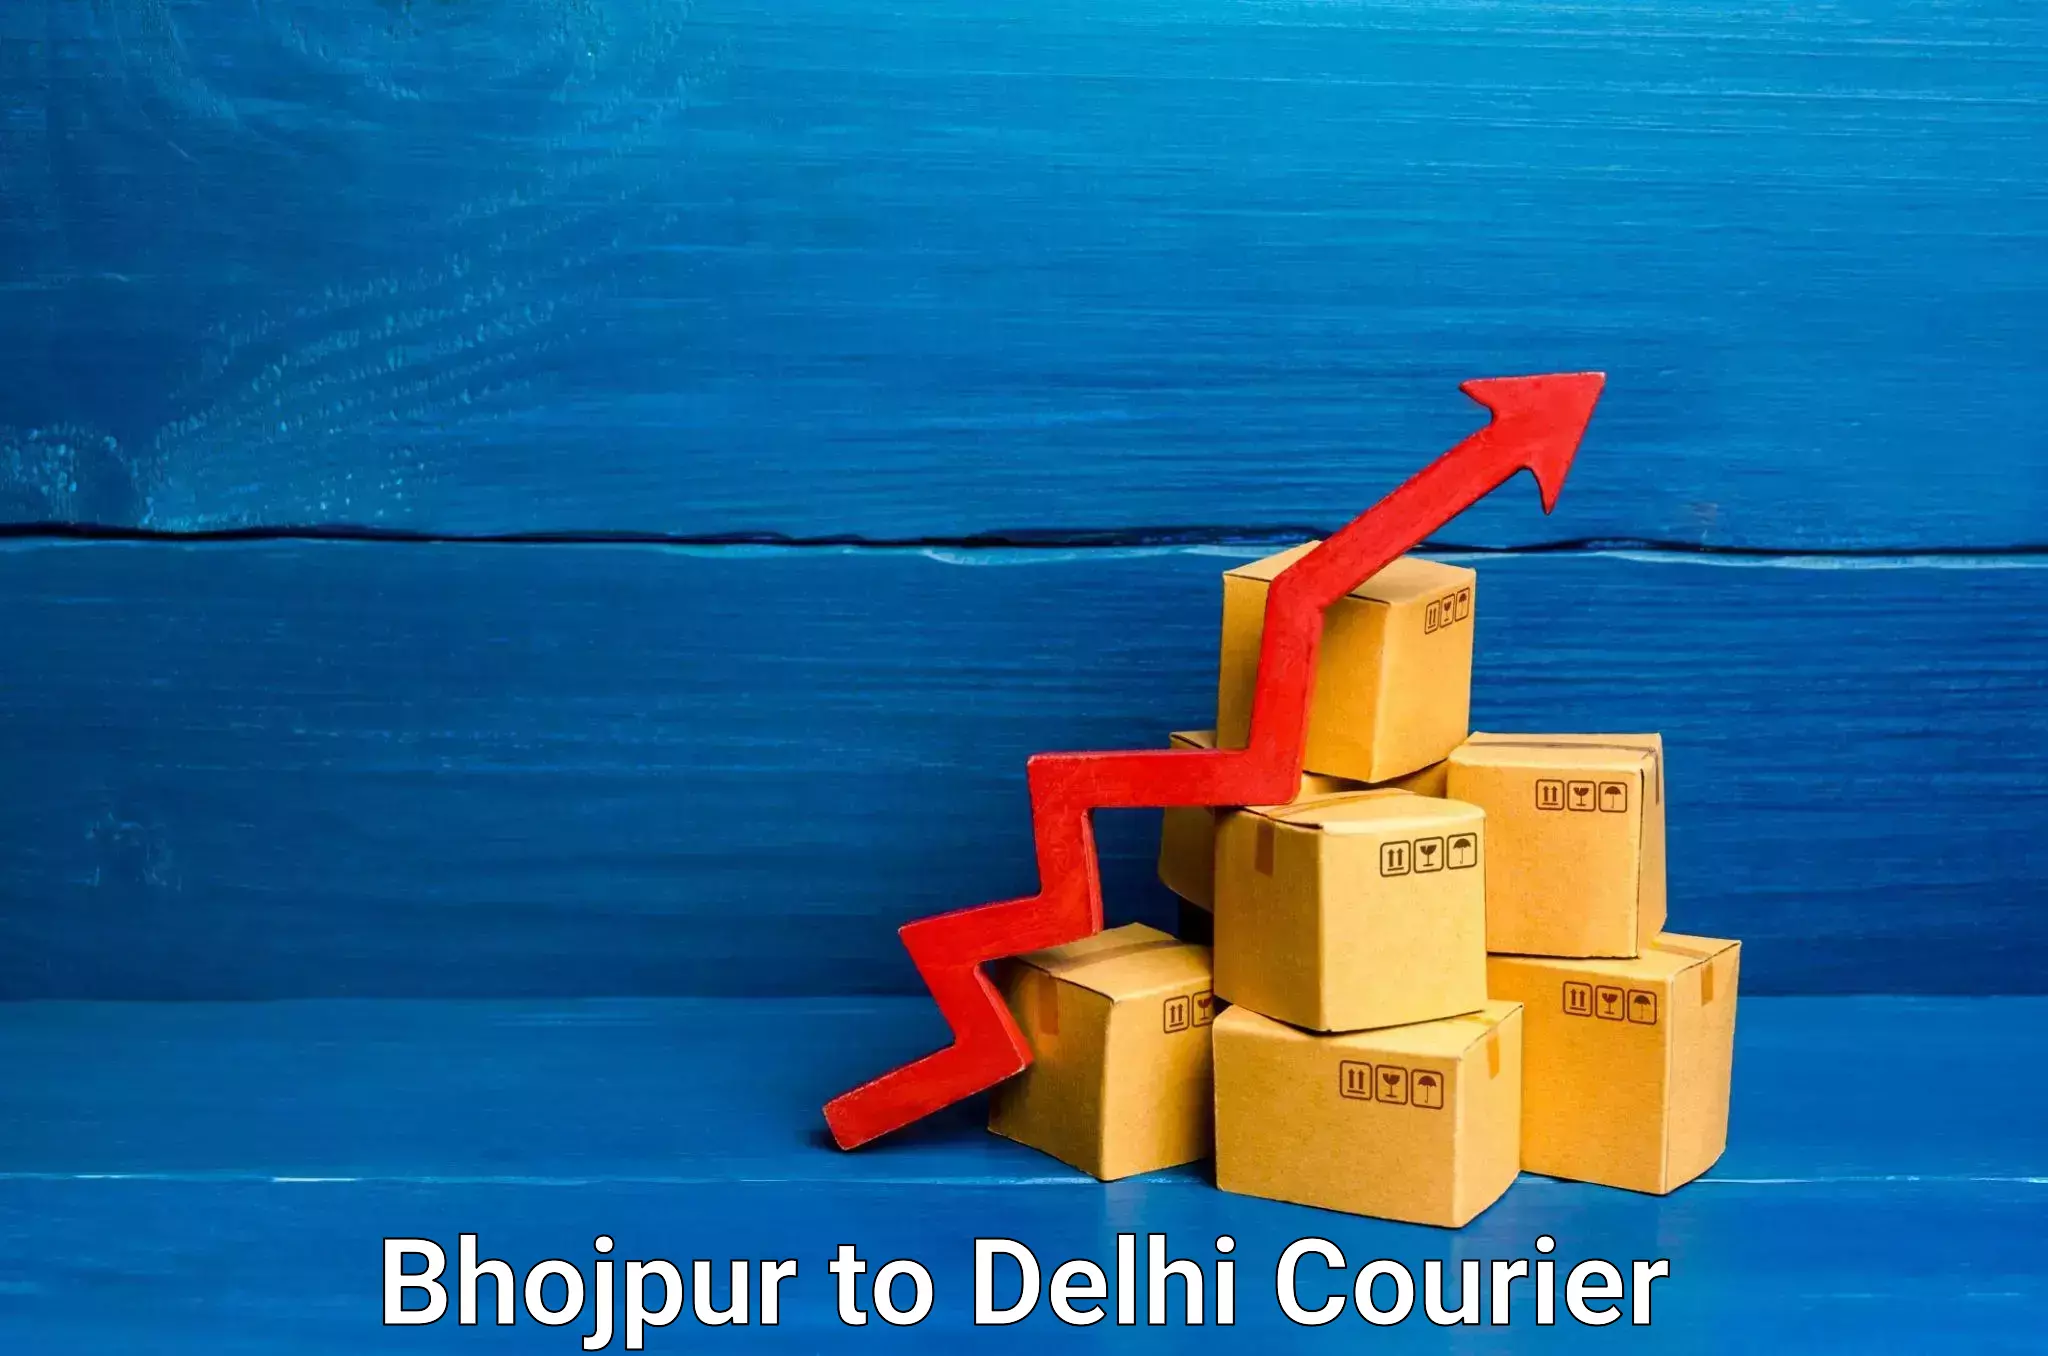 Professional moving company Bhojpur to Delhi